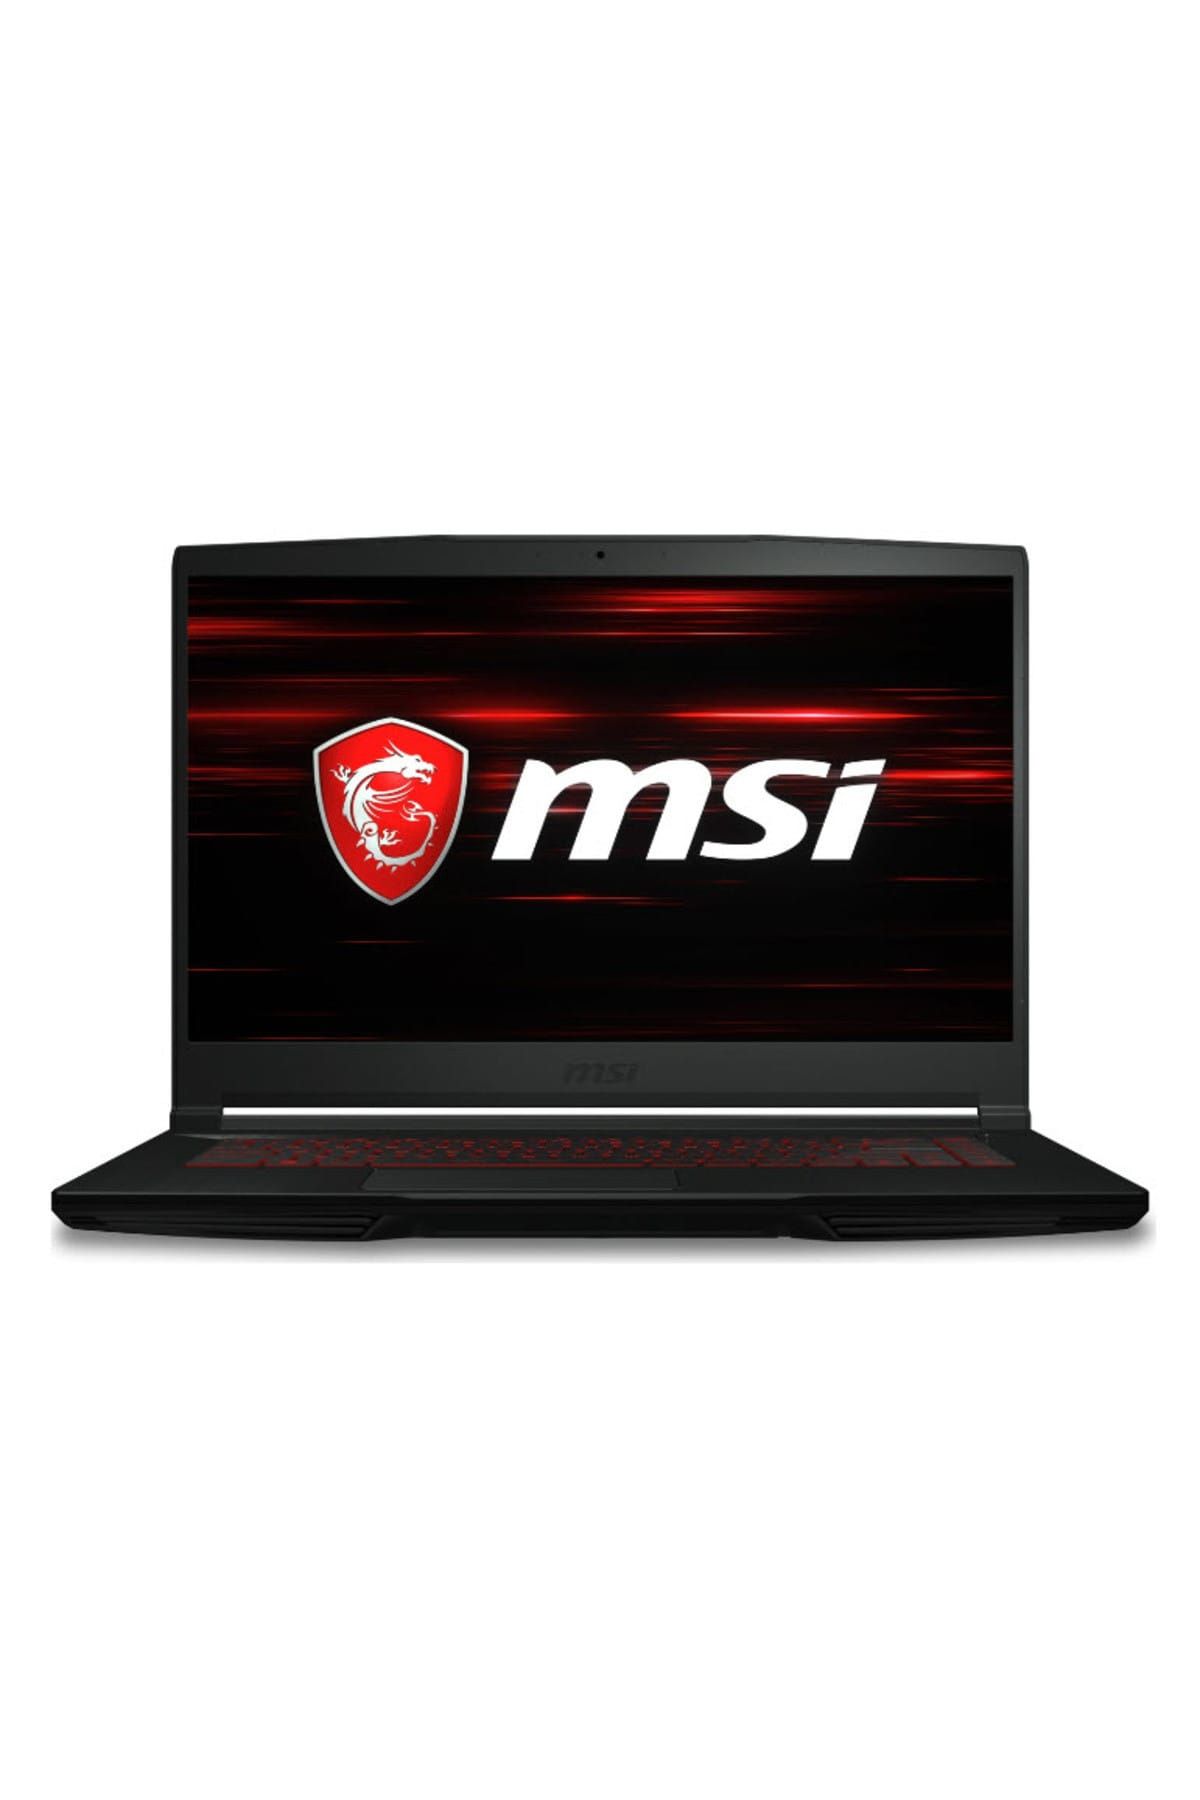 MSI Gf63 Thin 8SC-030 15.6 Gaming Laptop, Thin Bezel, Intel Core i5-8300H, Nvidia GeForce Gtx1650, 8gb, 256GB NVMe NVMe SSD